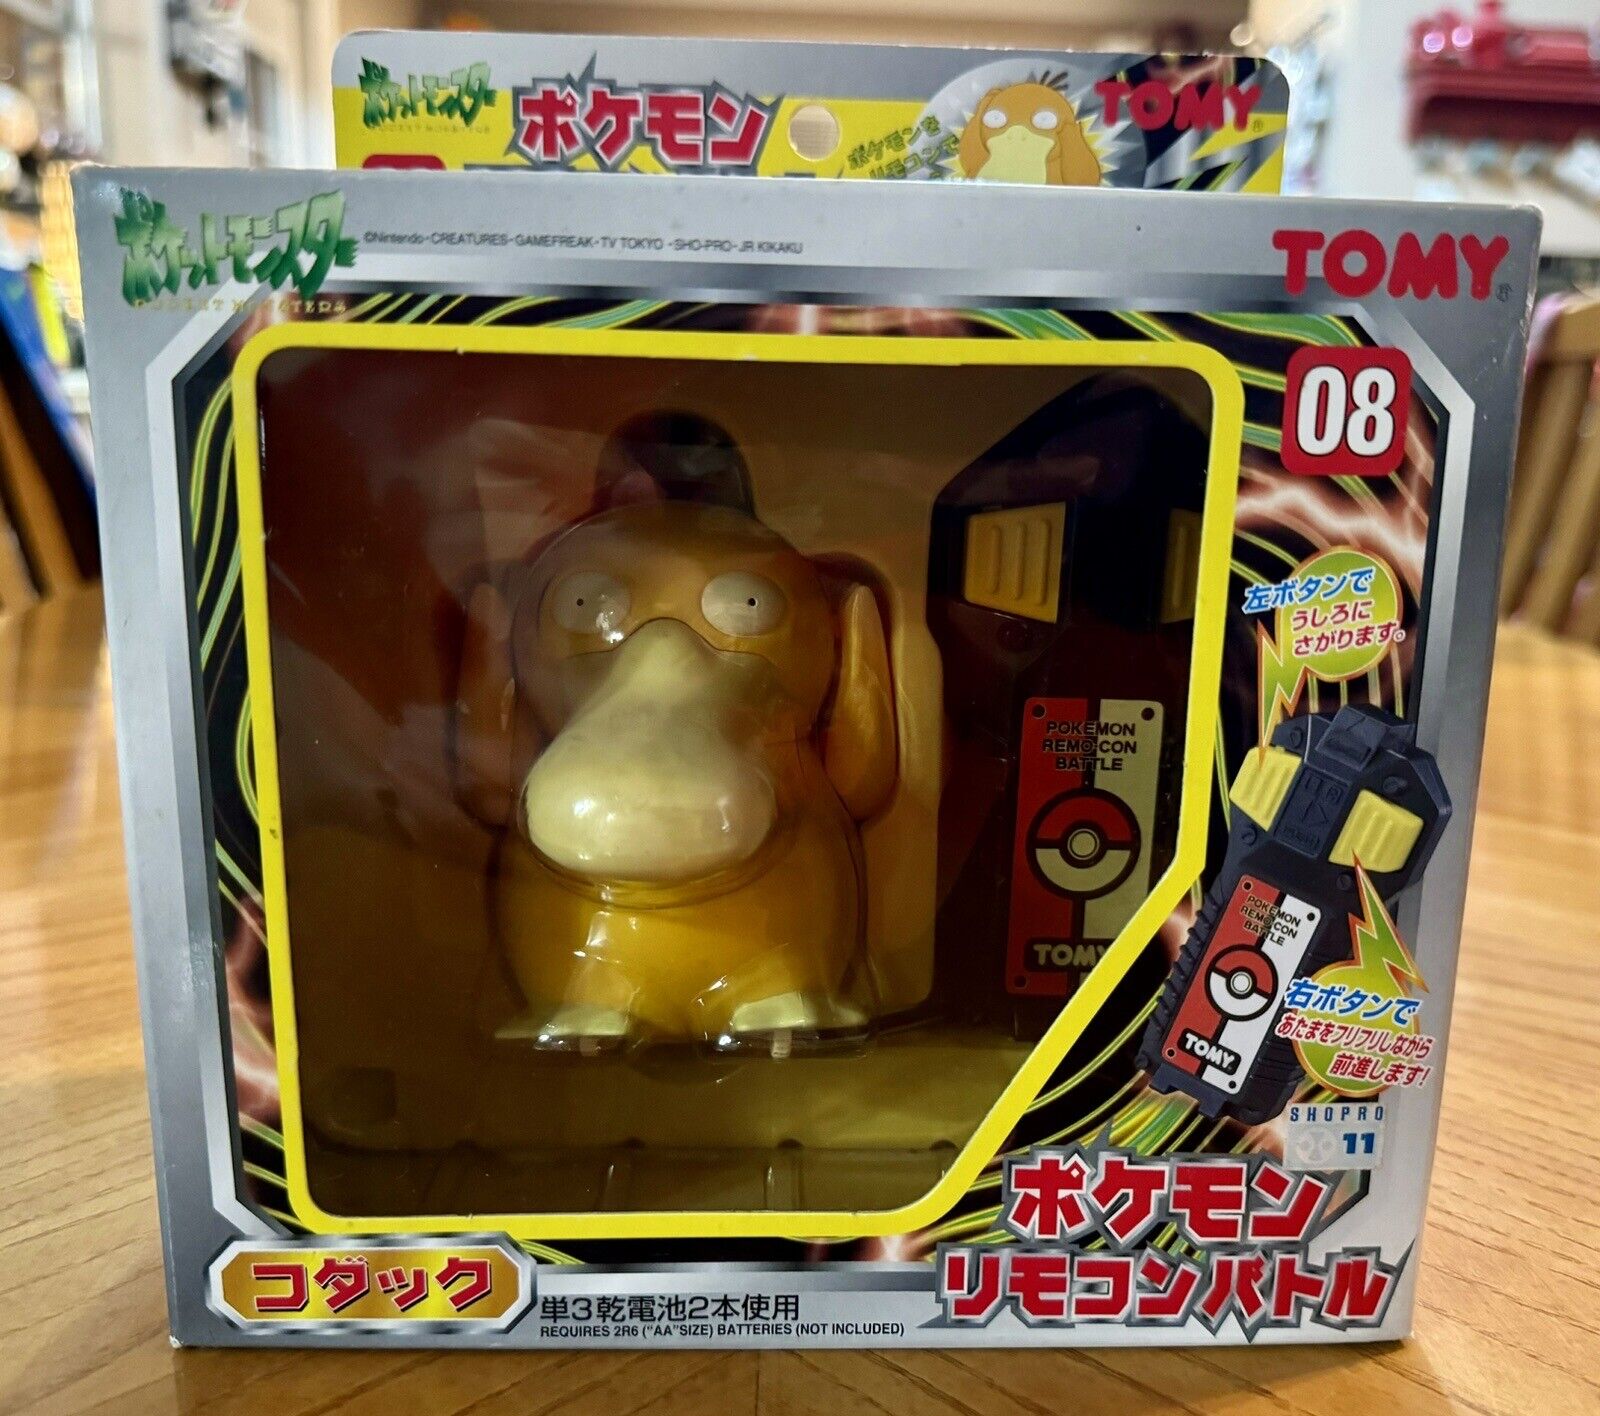 Pokemon Psyduck Remote Control Electronic Action Figure Toy Tomy Shopro Bandai